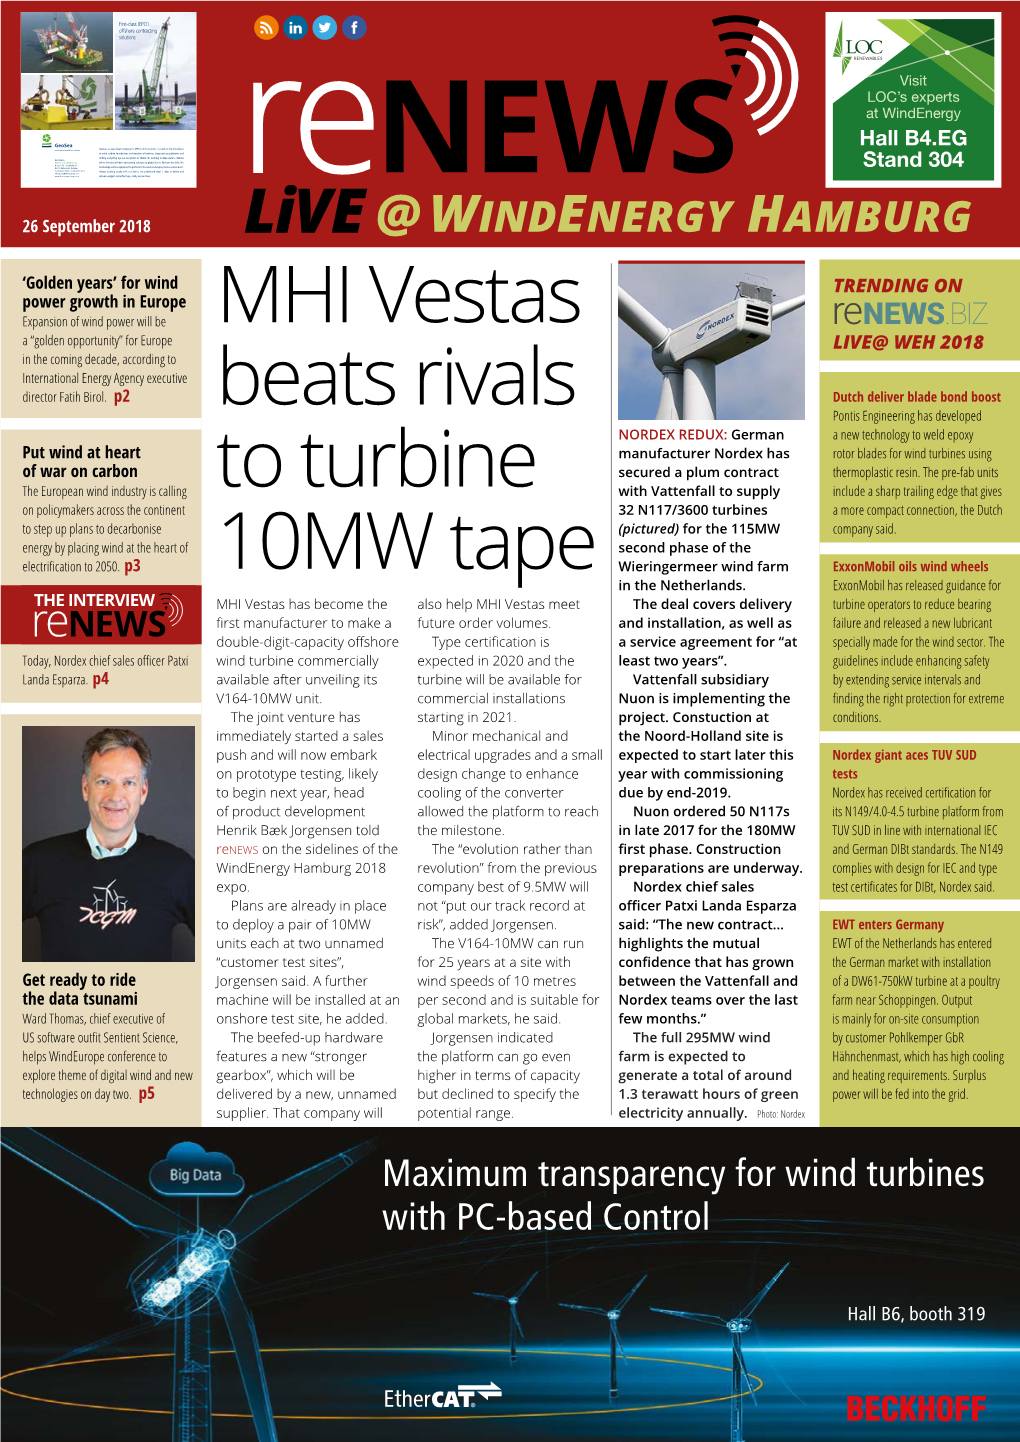 MHI Vestas Beats Rivals to Turbine 10MW Tape